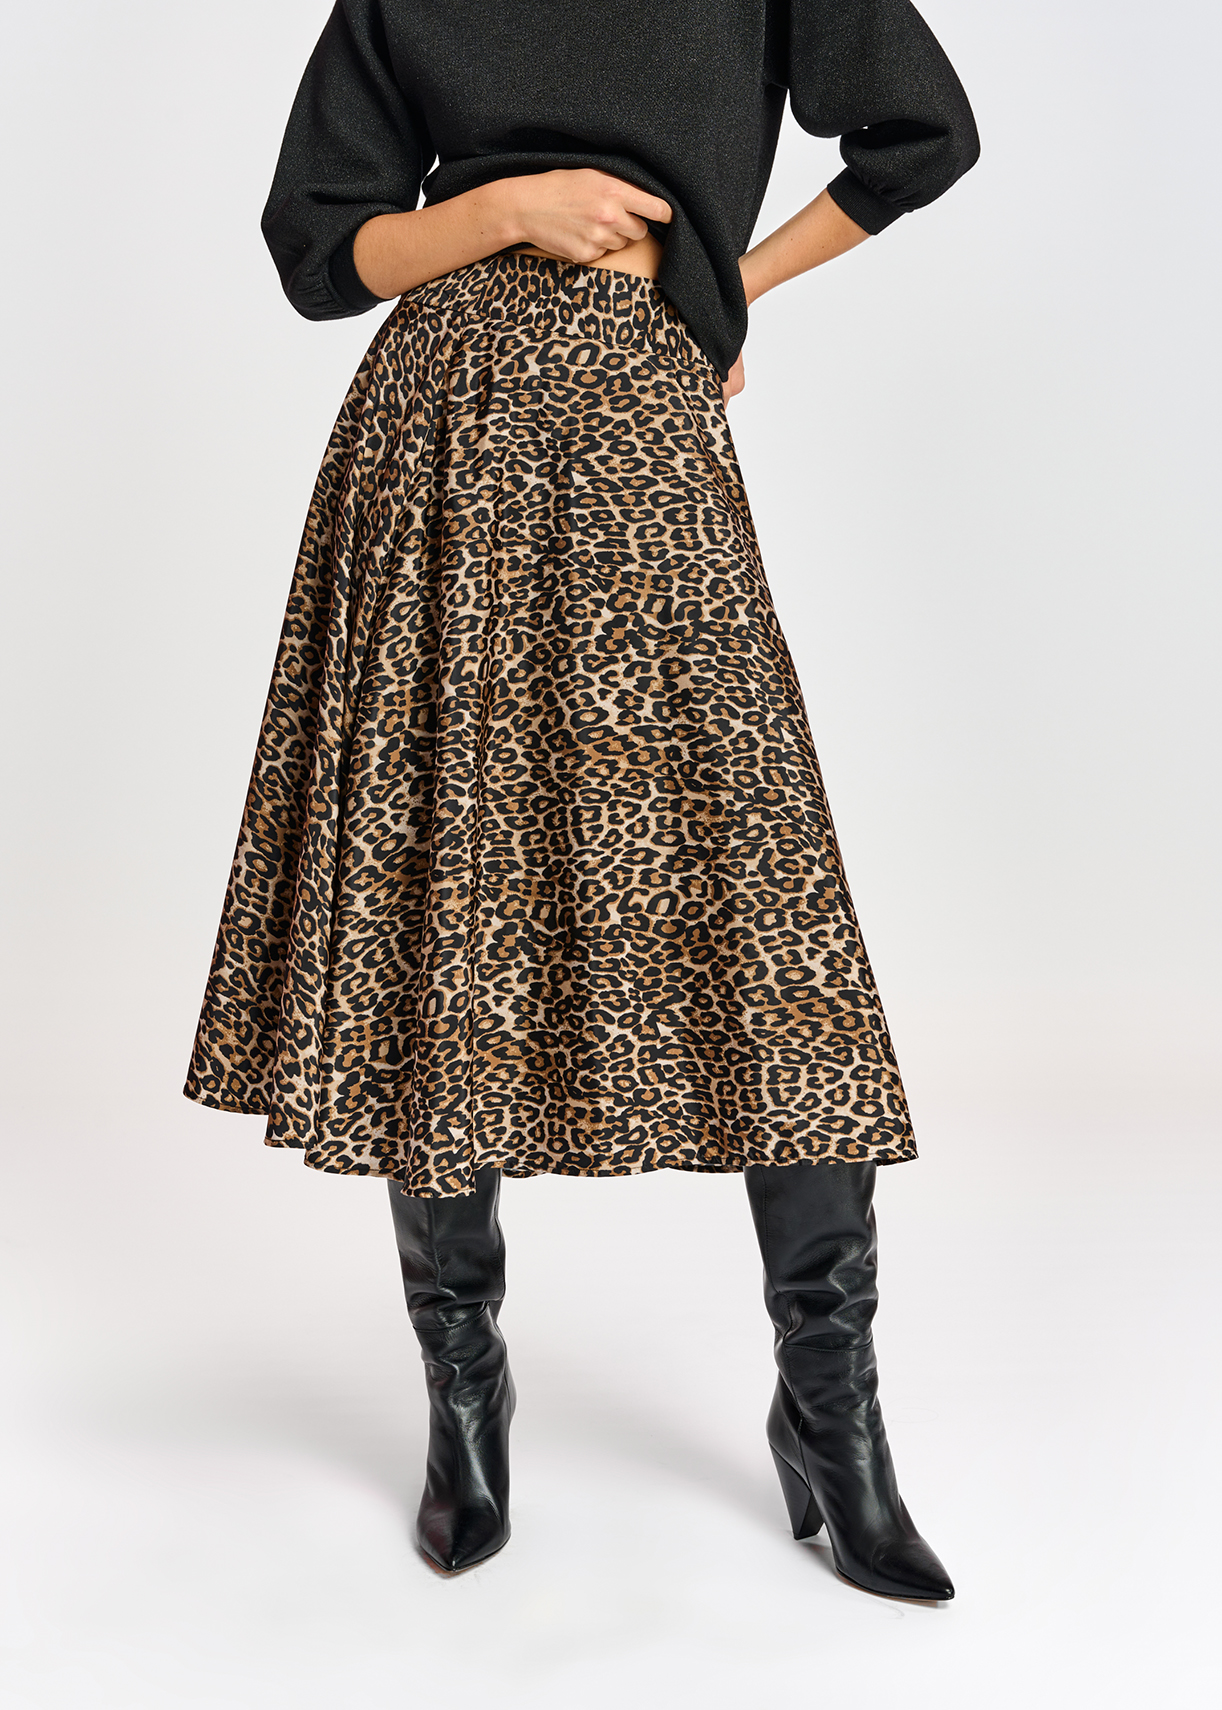 leopard print skirt very